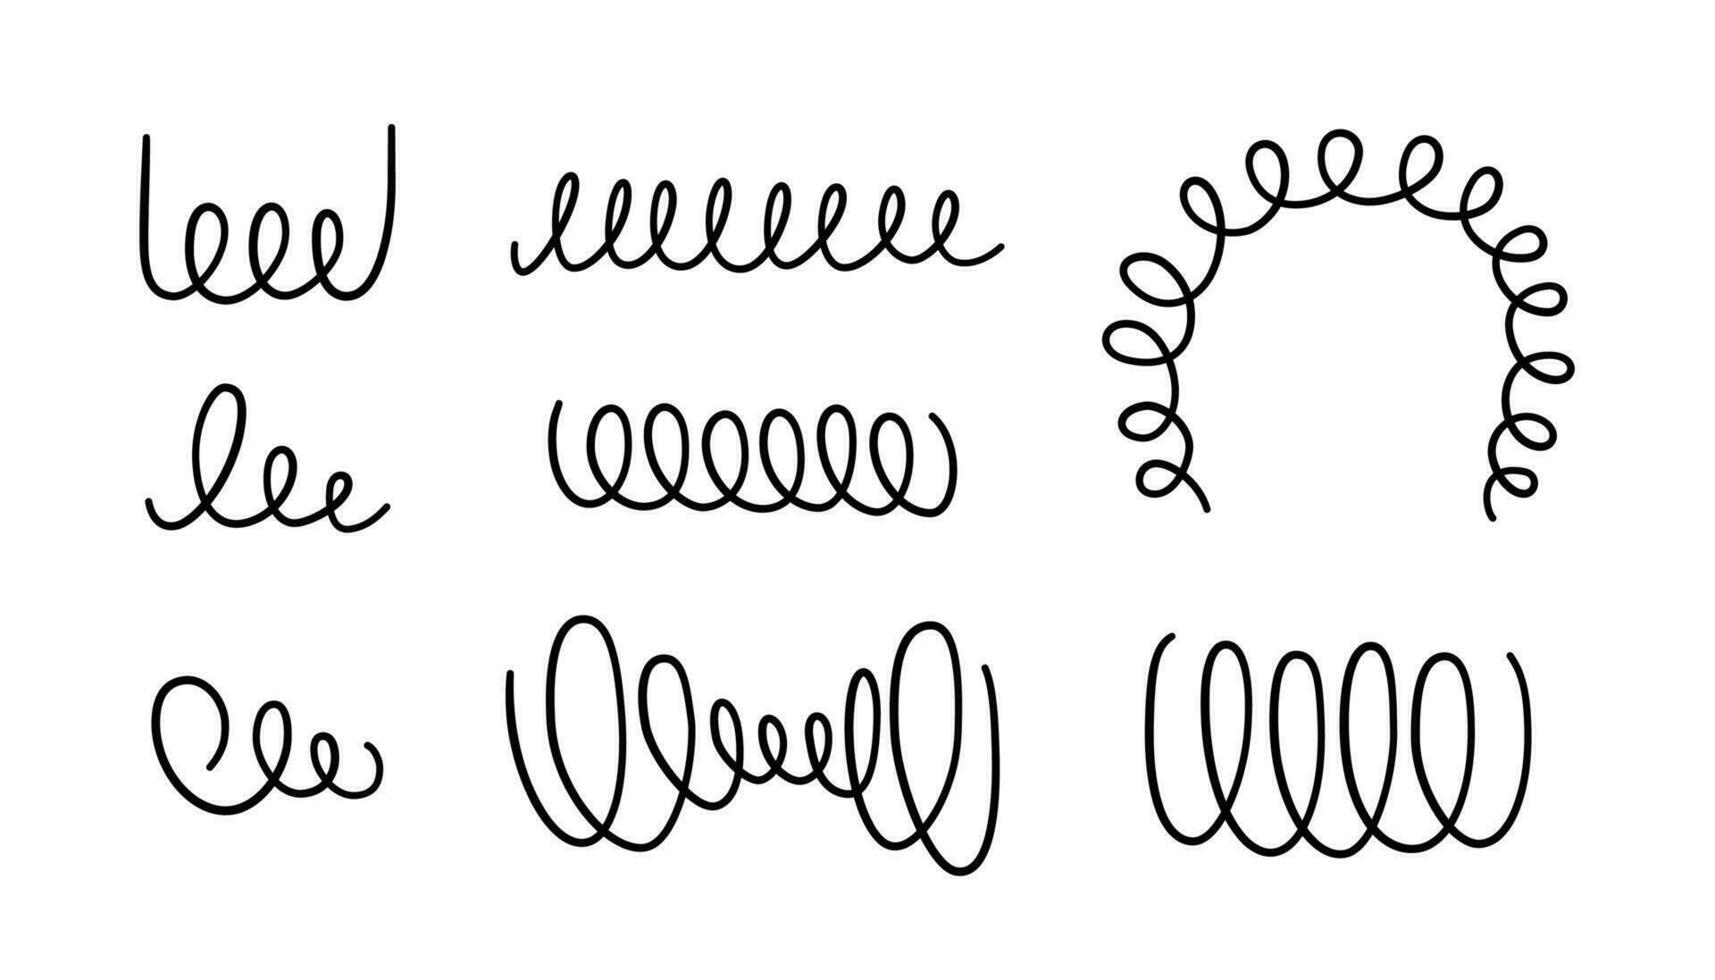 mano dibujado espiral muelles colocar. garabatear flexible bobinas, cable primavera simbolos metal bobina espiral iconos vector ilustración aislado en blanco antecedentes